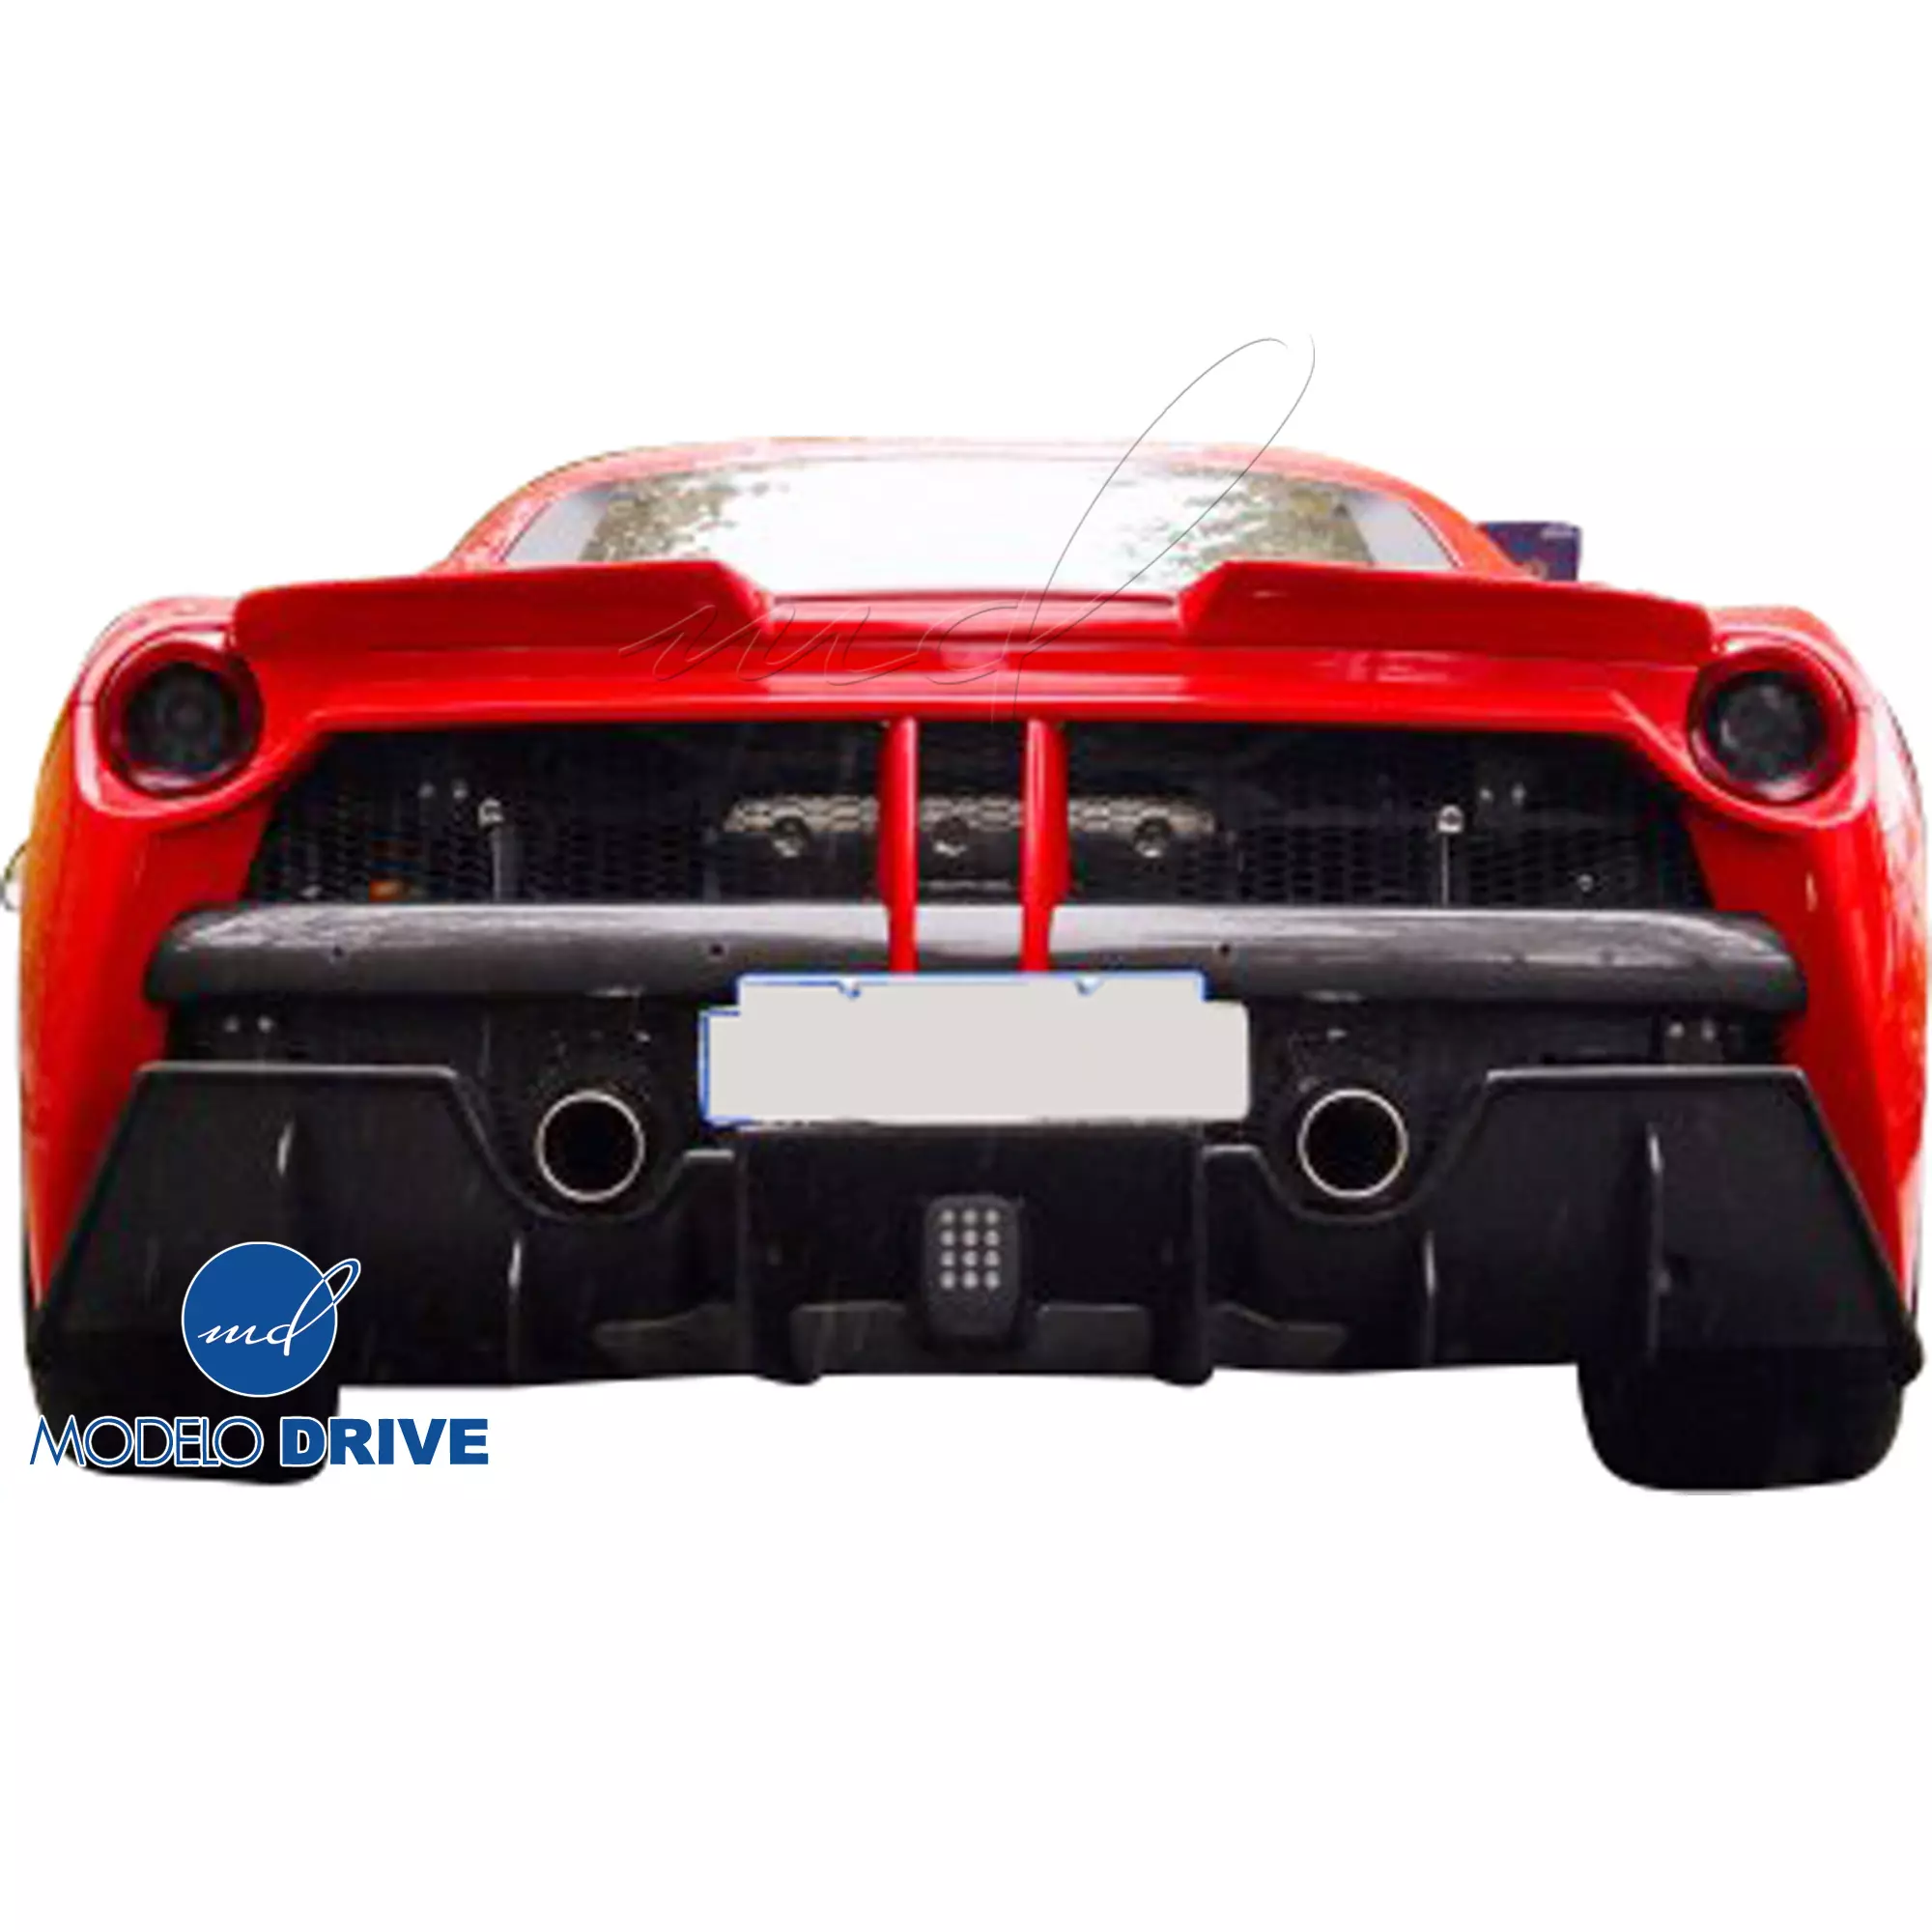 ModeloDrive Partial Carbon Fiber MDES Body Kit > Ferrari 488 GTB F142M 2016-2019 - Image 36